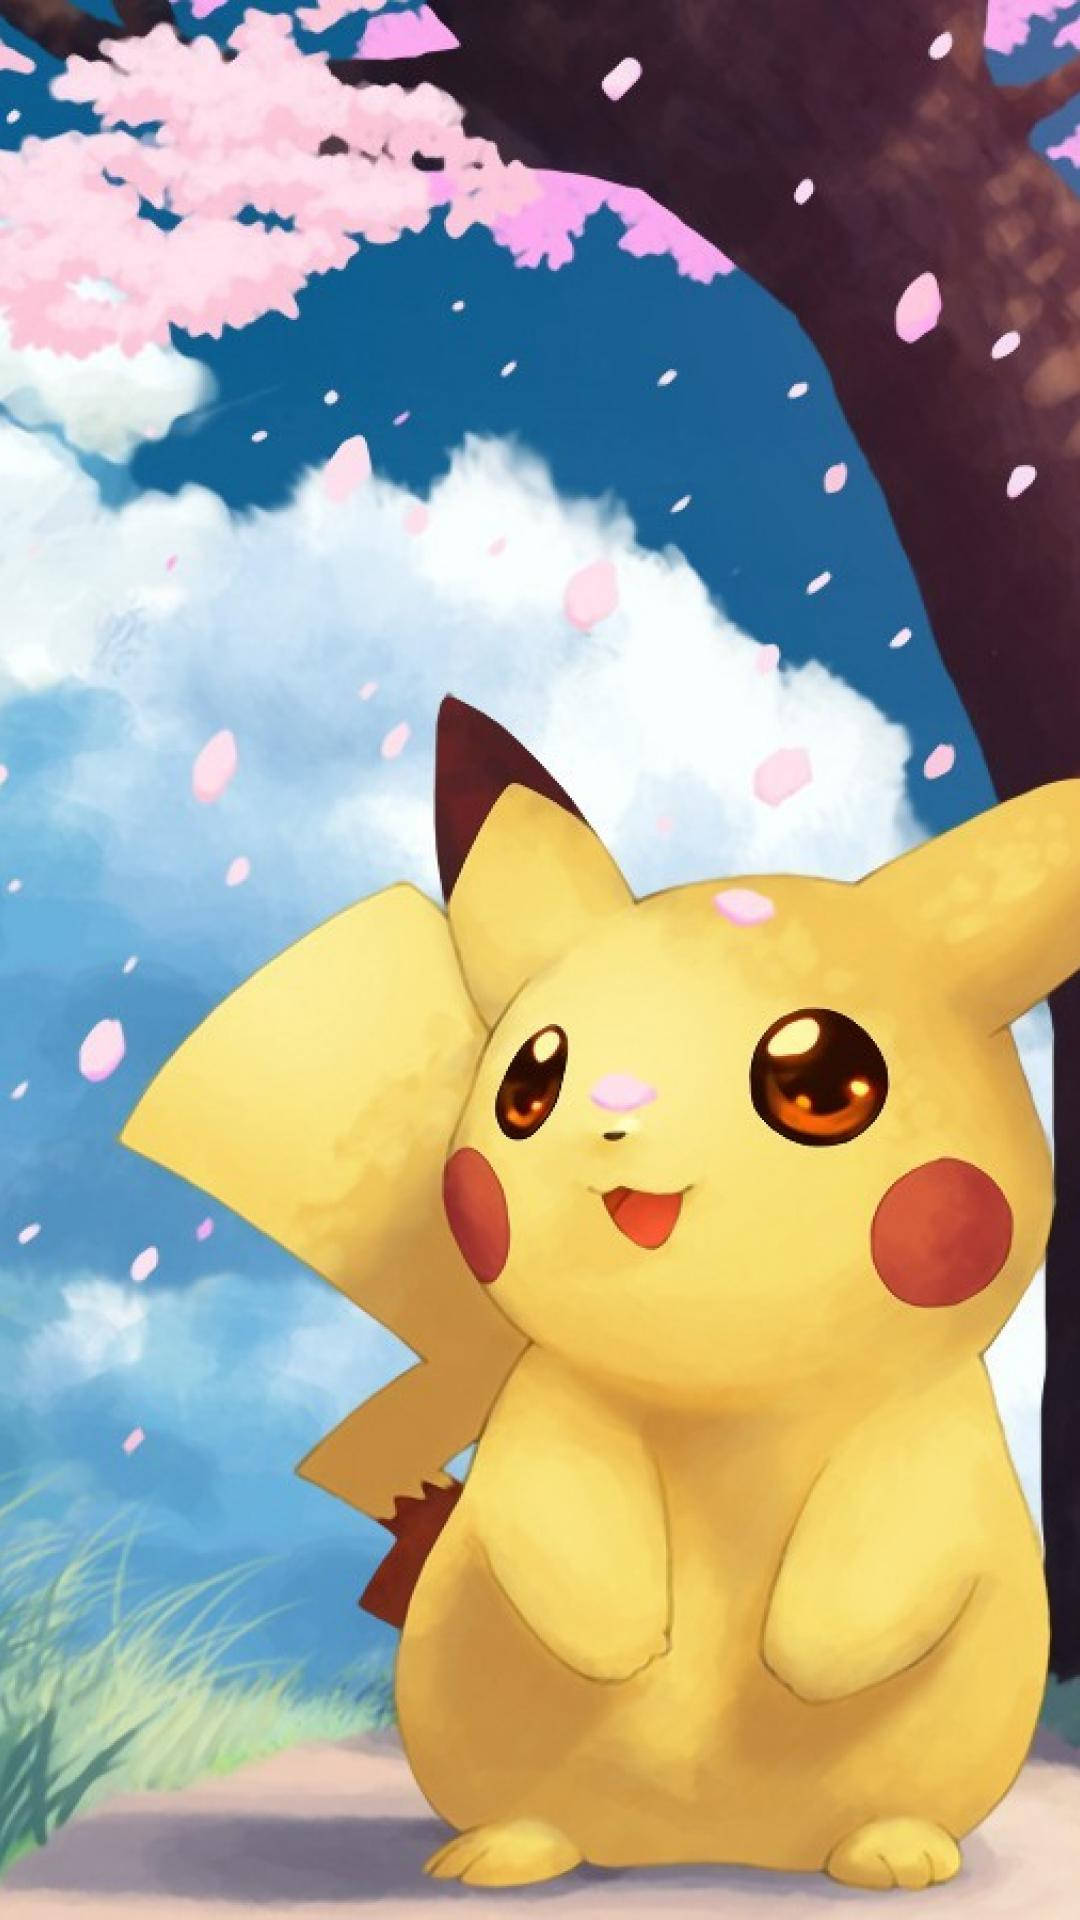 Pikachu iPhone Cherry Tree Wallpaper